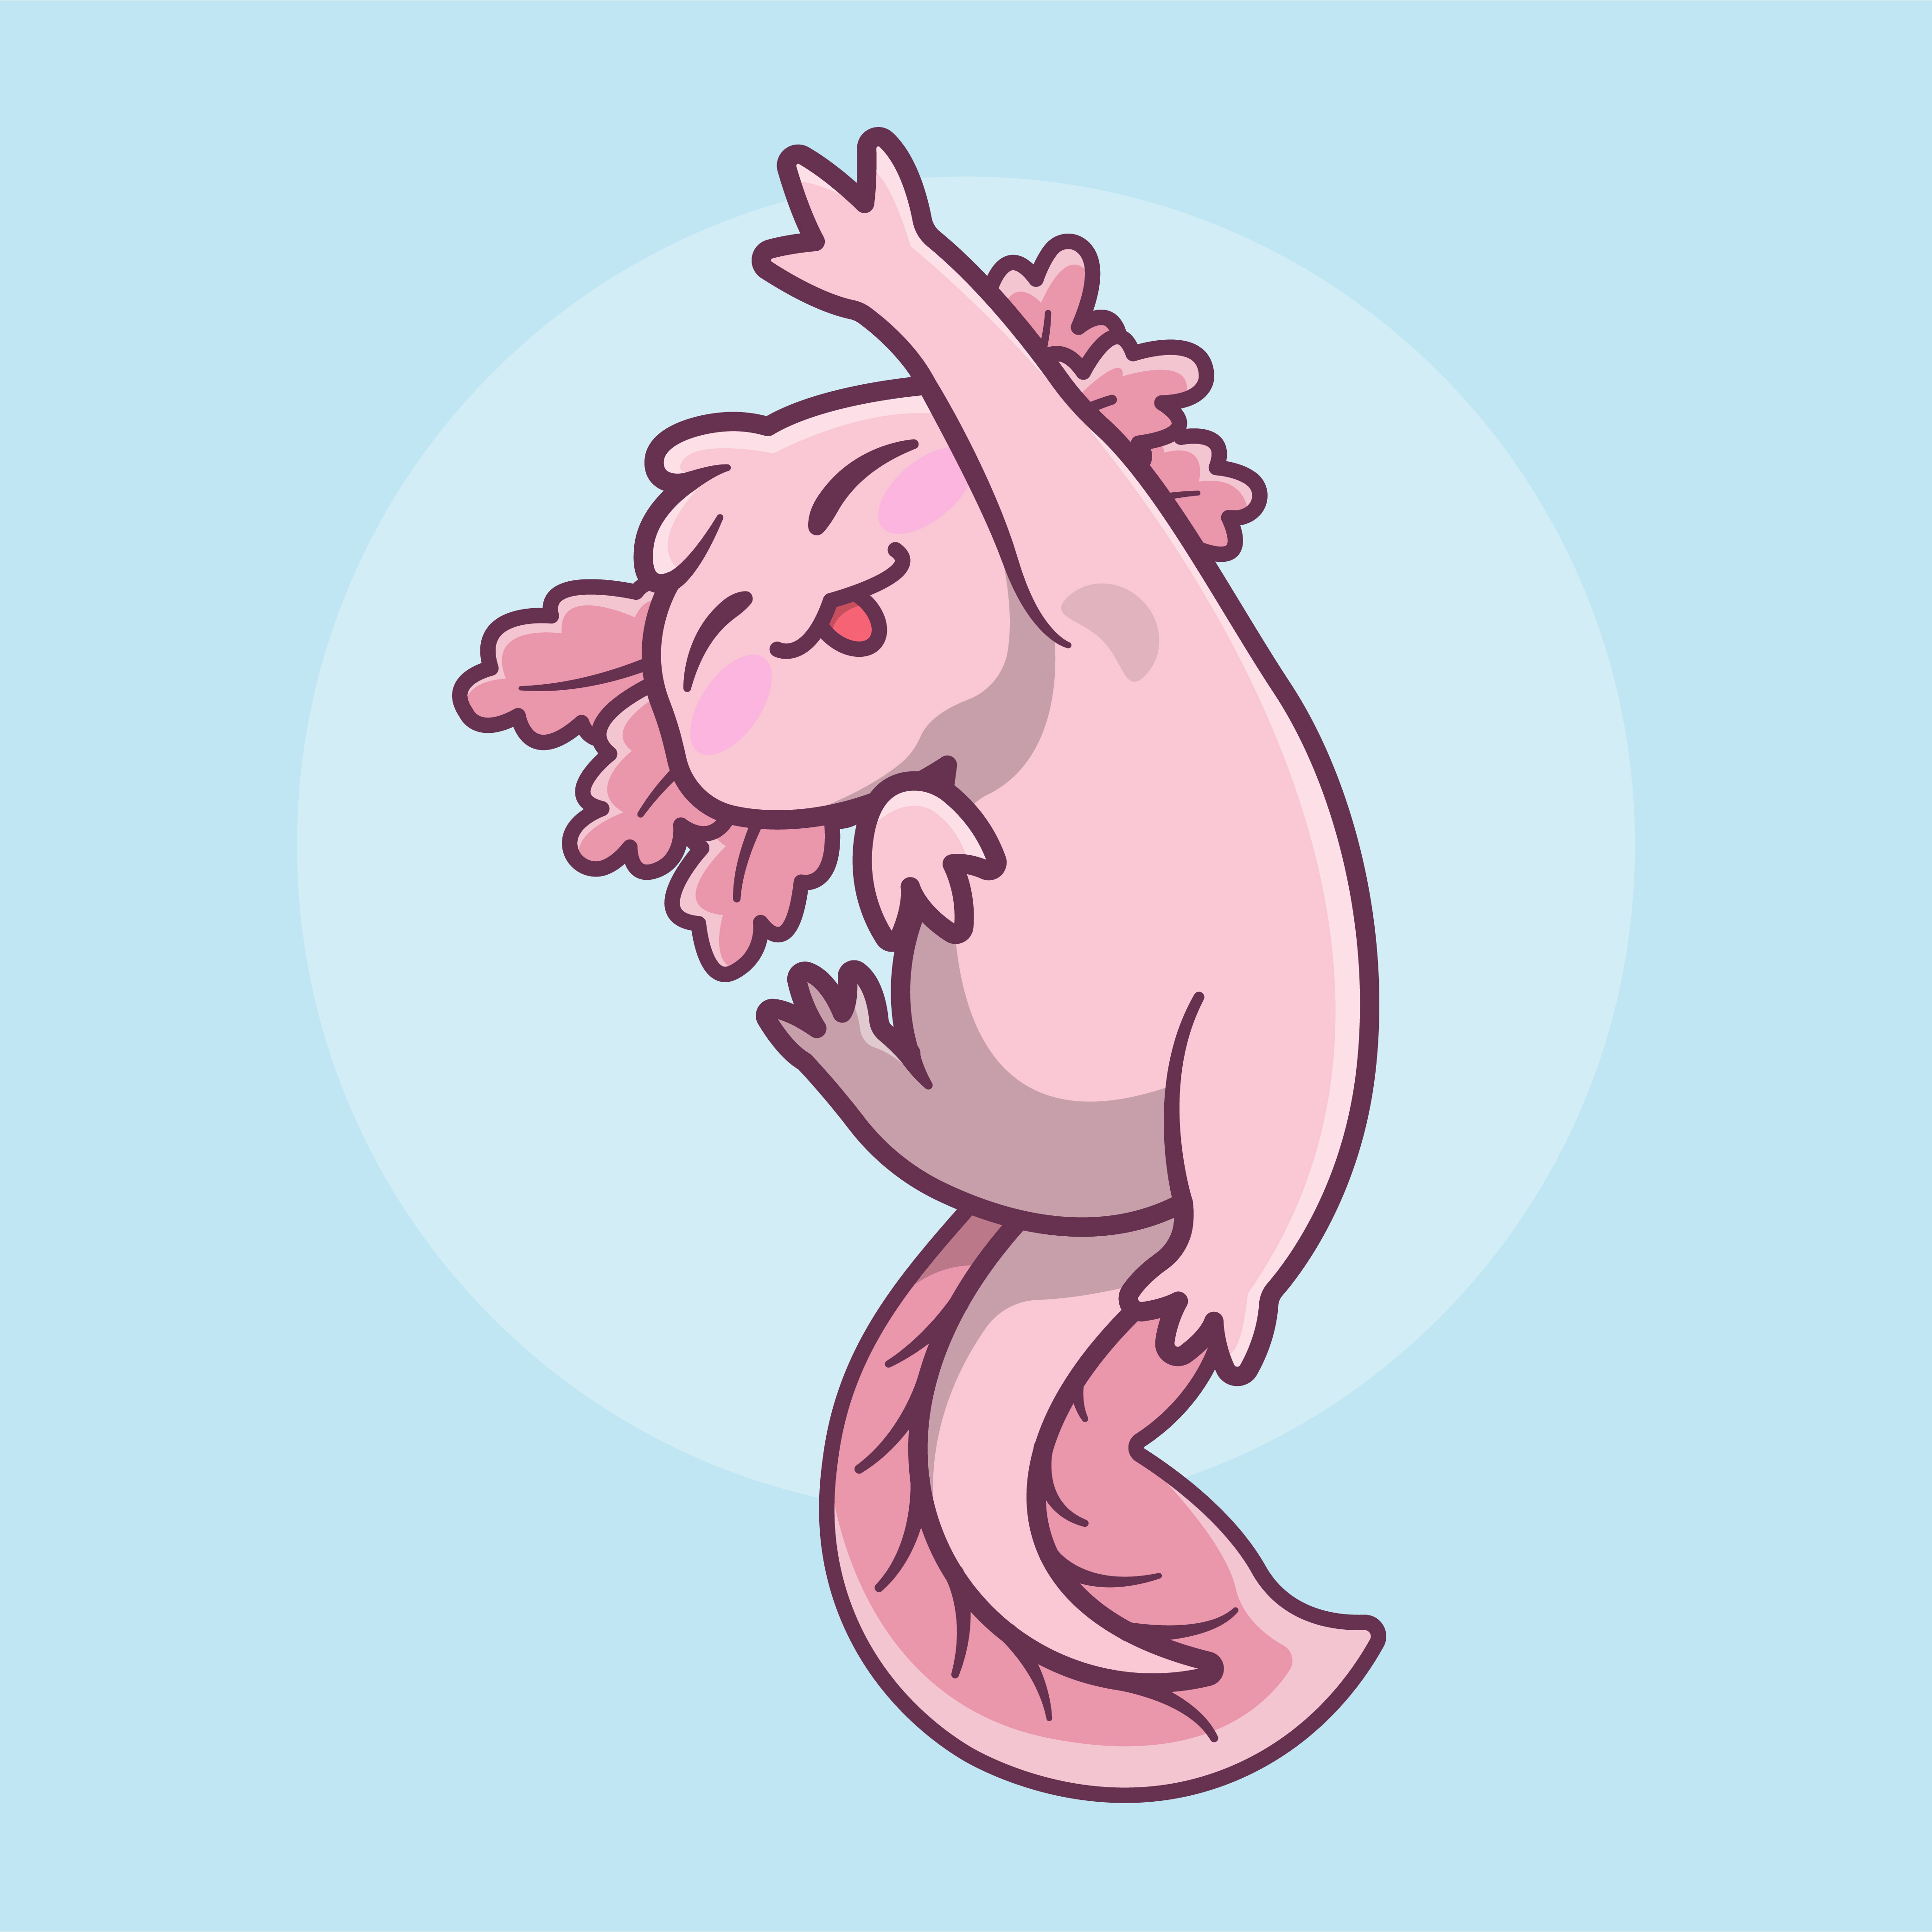 Illustration a cute axolotl by Ahyara on Dribbble